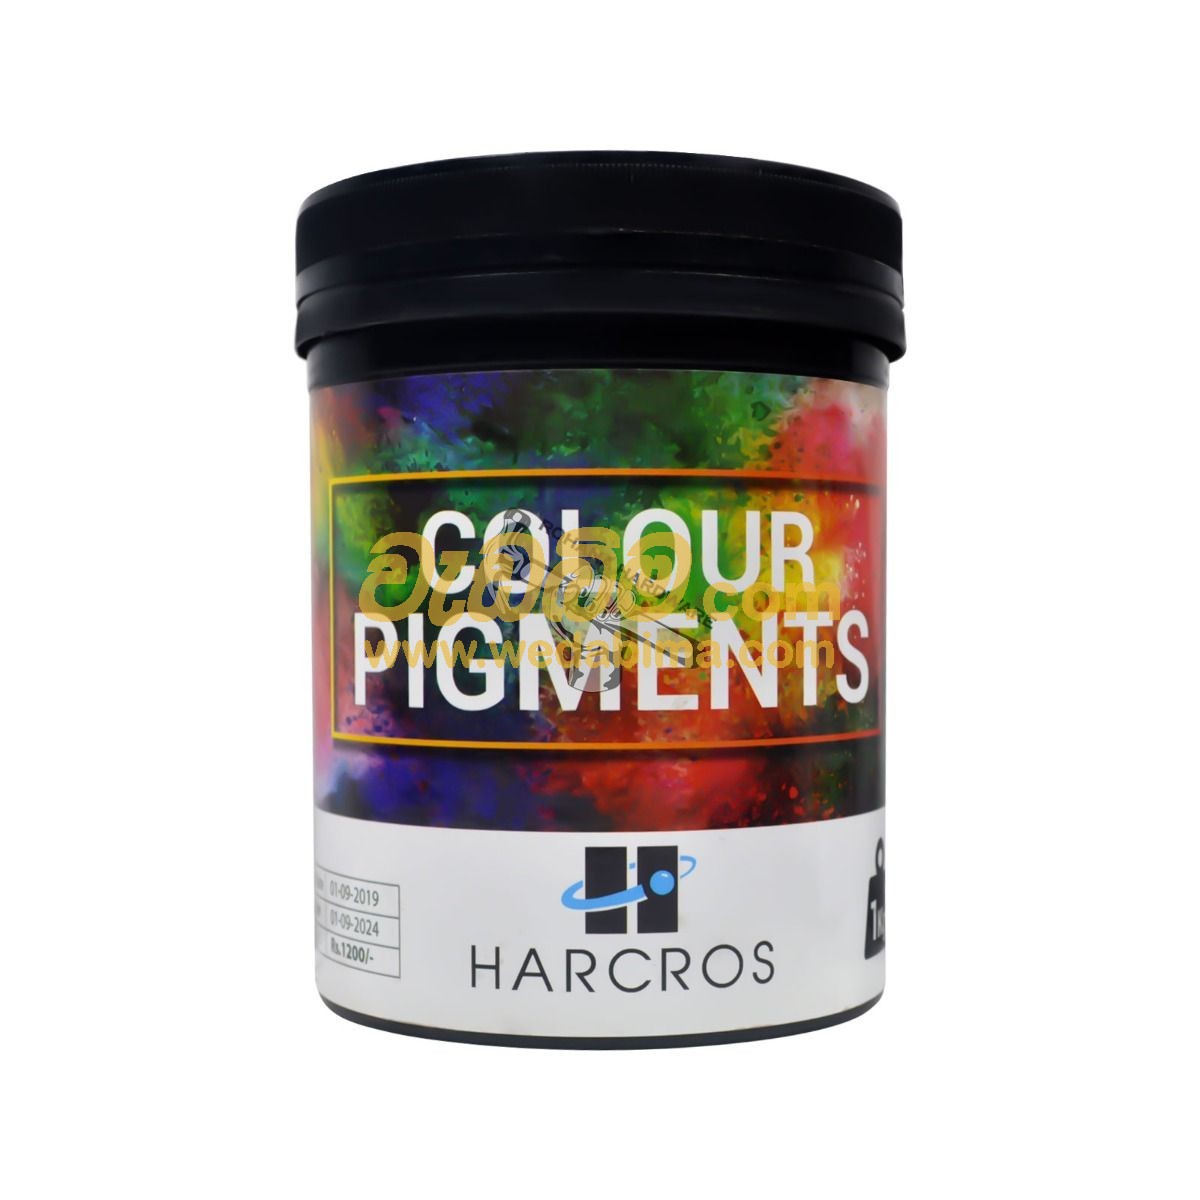 1 KG Harcros Pigment